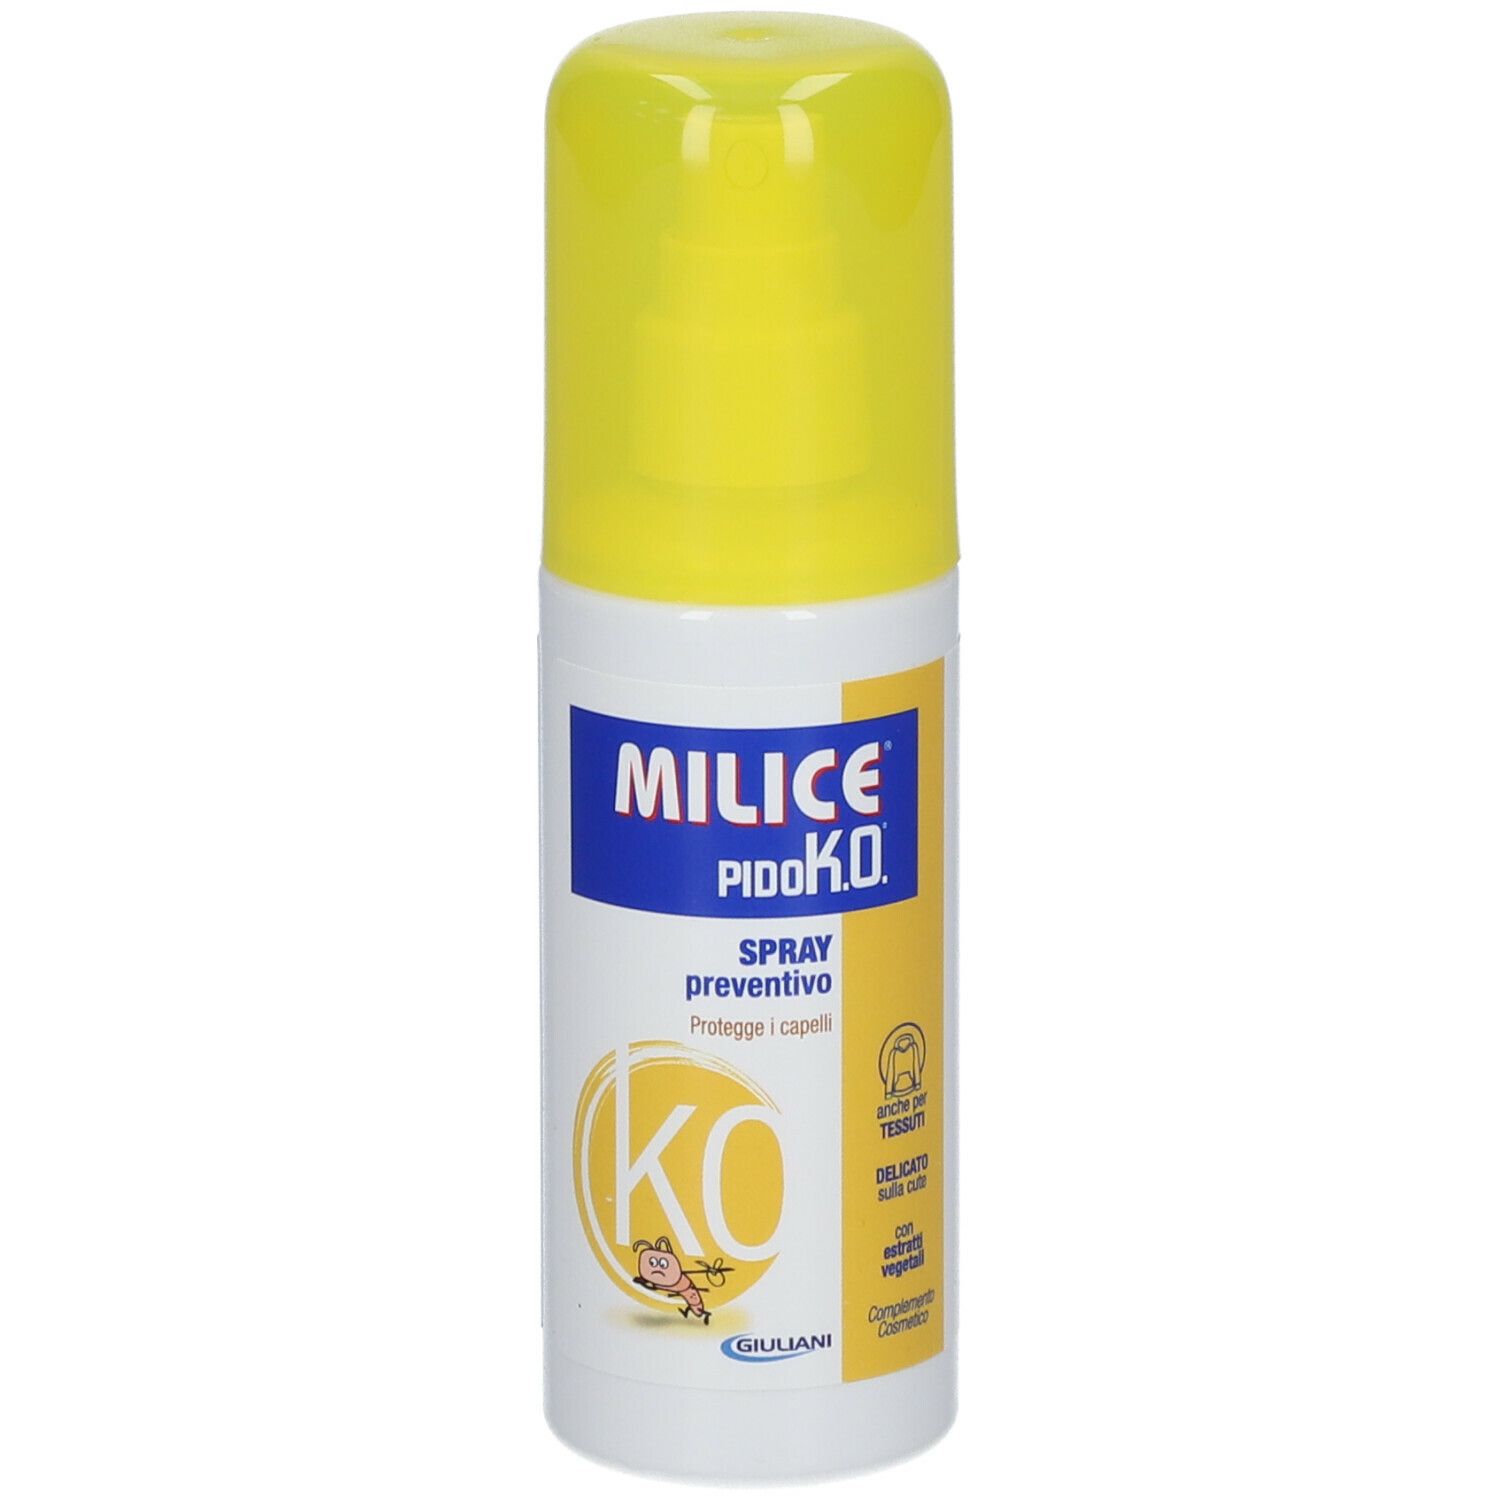 Milice® PidoK.O. Spray Preventivo